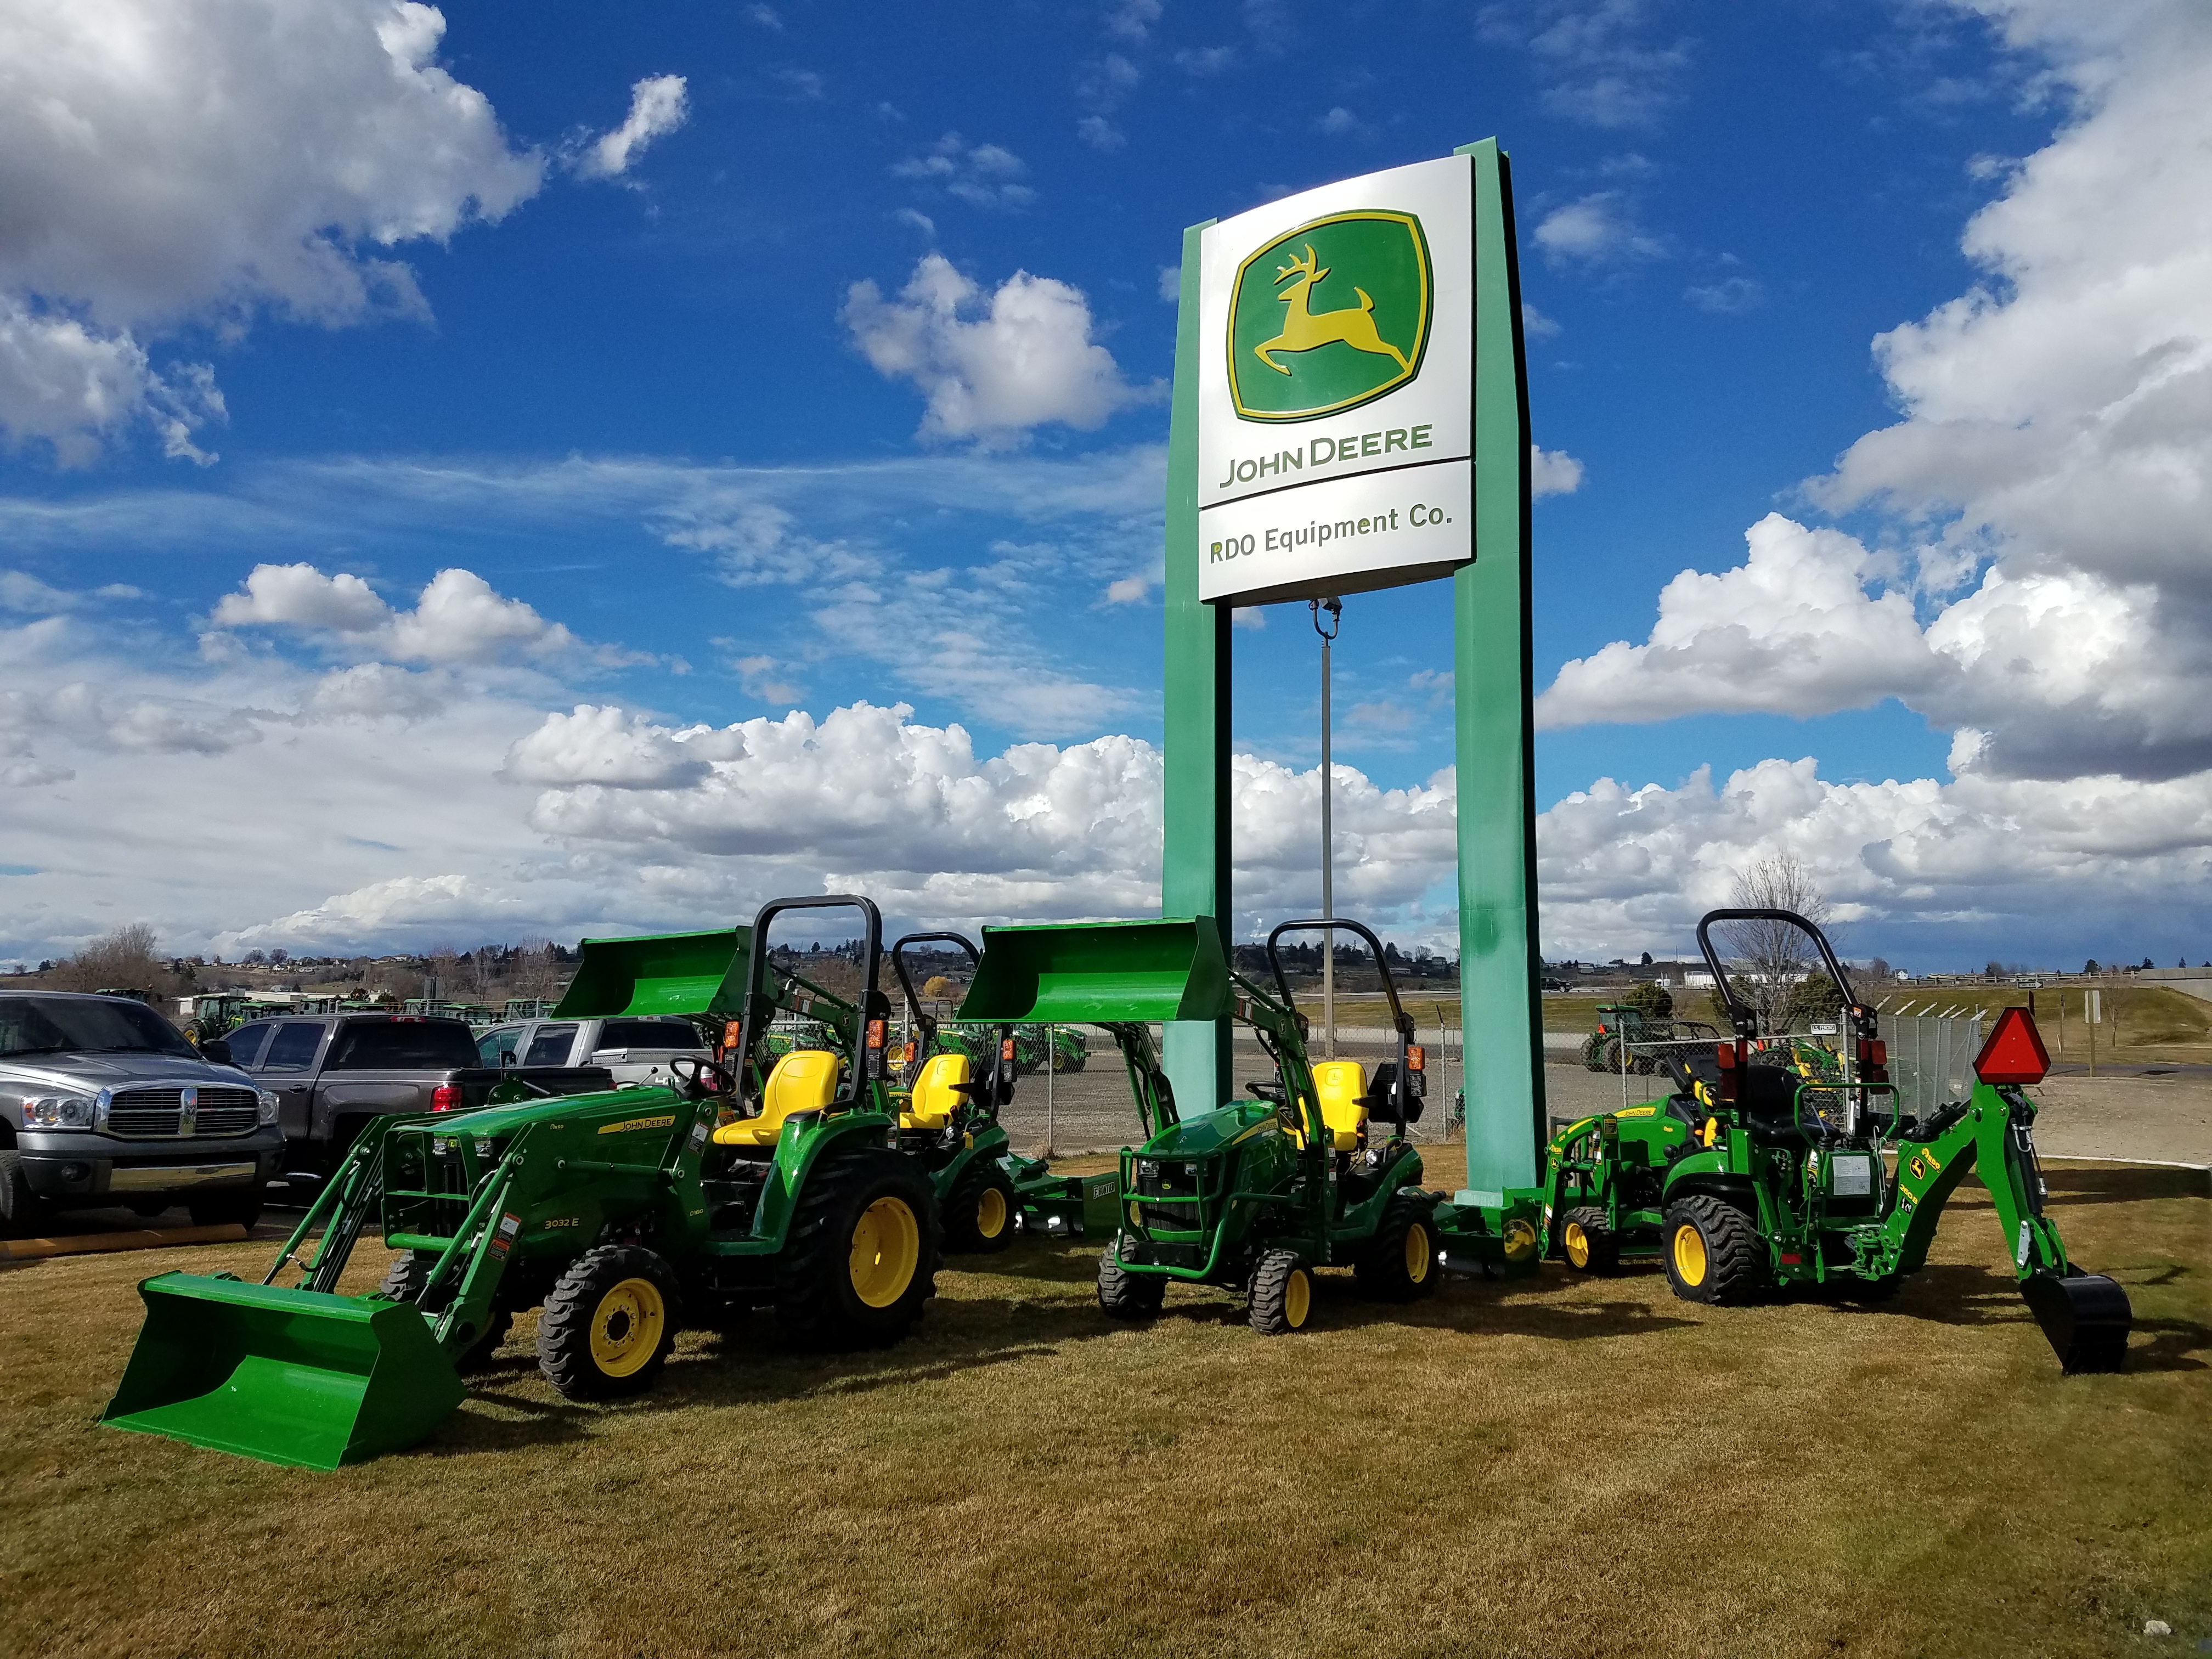 John Deere Utility Tractors at RDO Equipment Co. in Sunnyside, WA